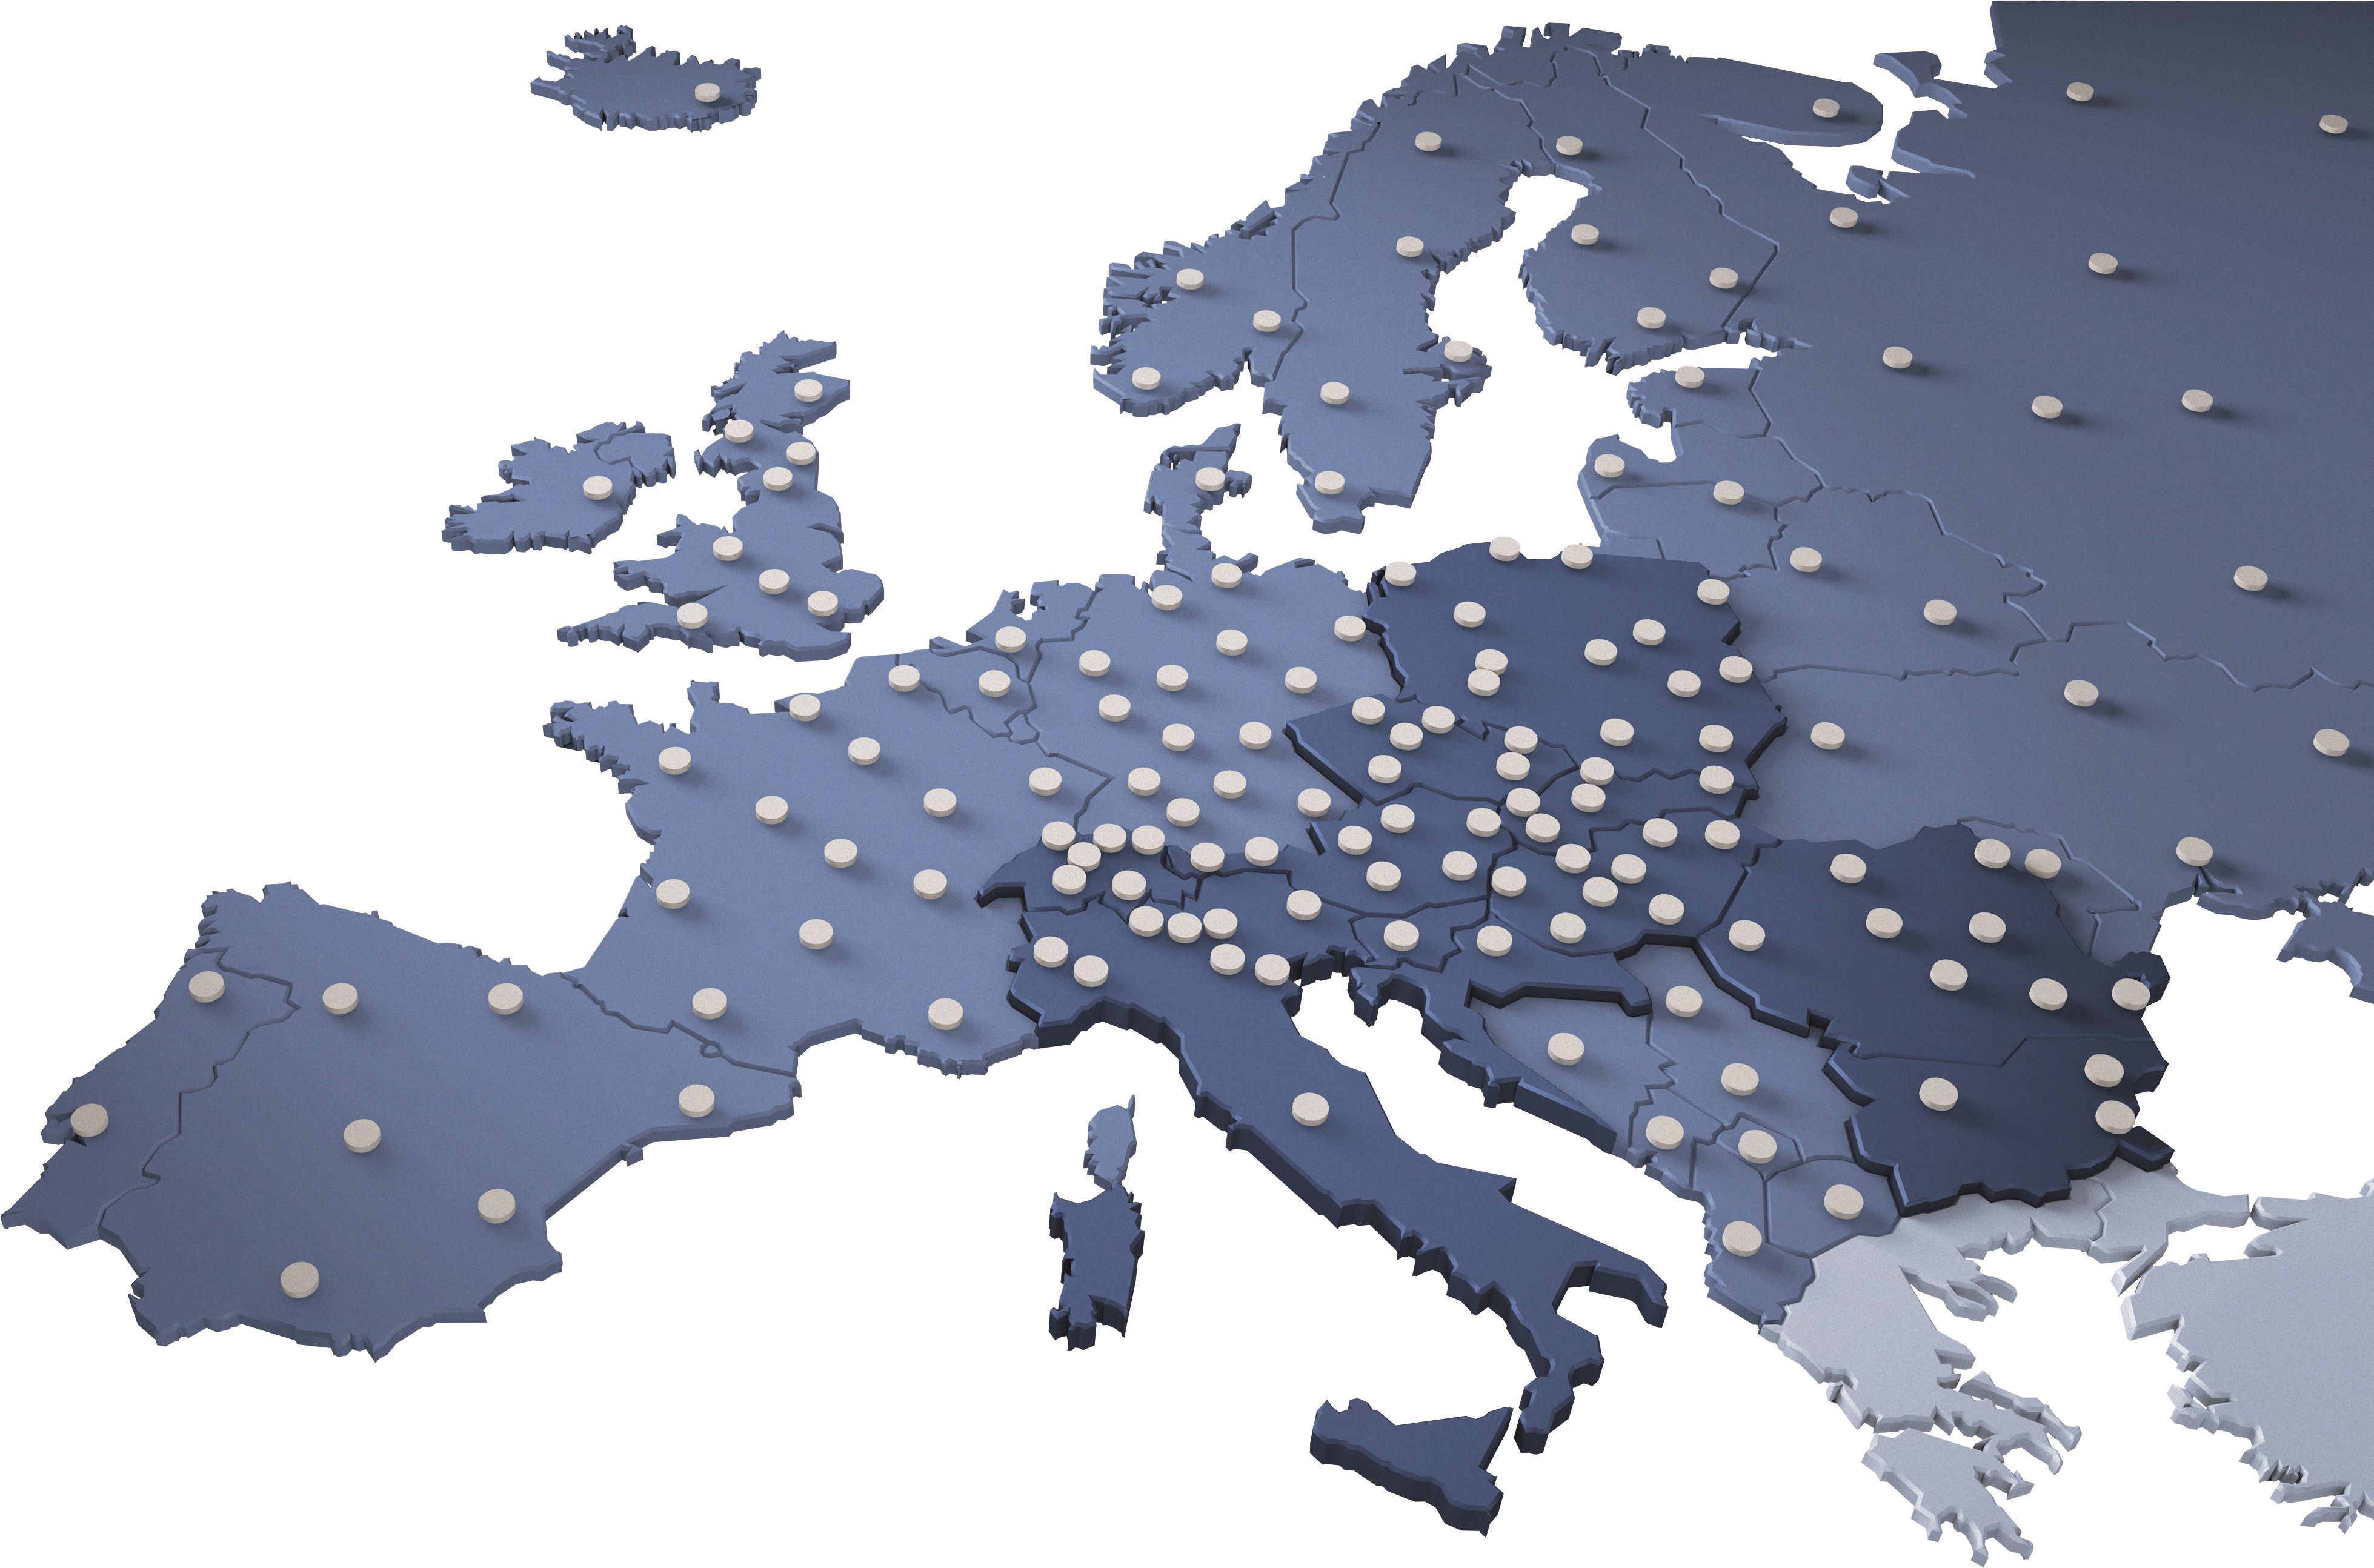 Europe-wide depot network